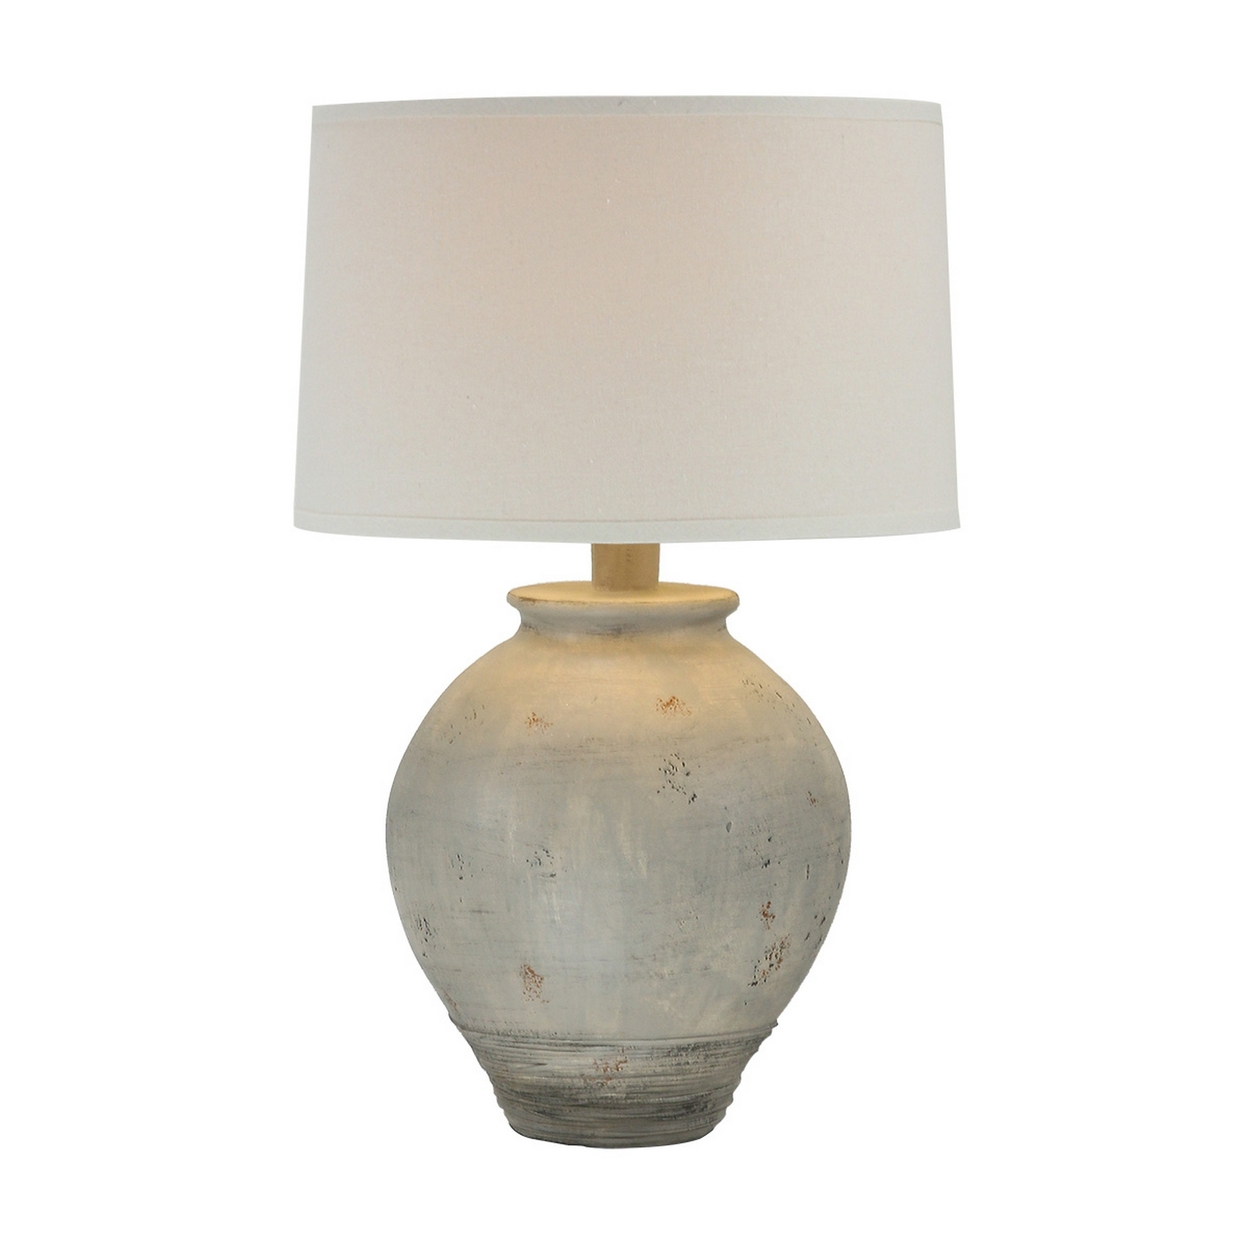 Amy 25 Inch Table Lamp, Jar Shape Body, White Cone Shade, Faux Concrete - Saltoro Sherpi